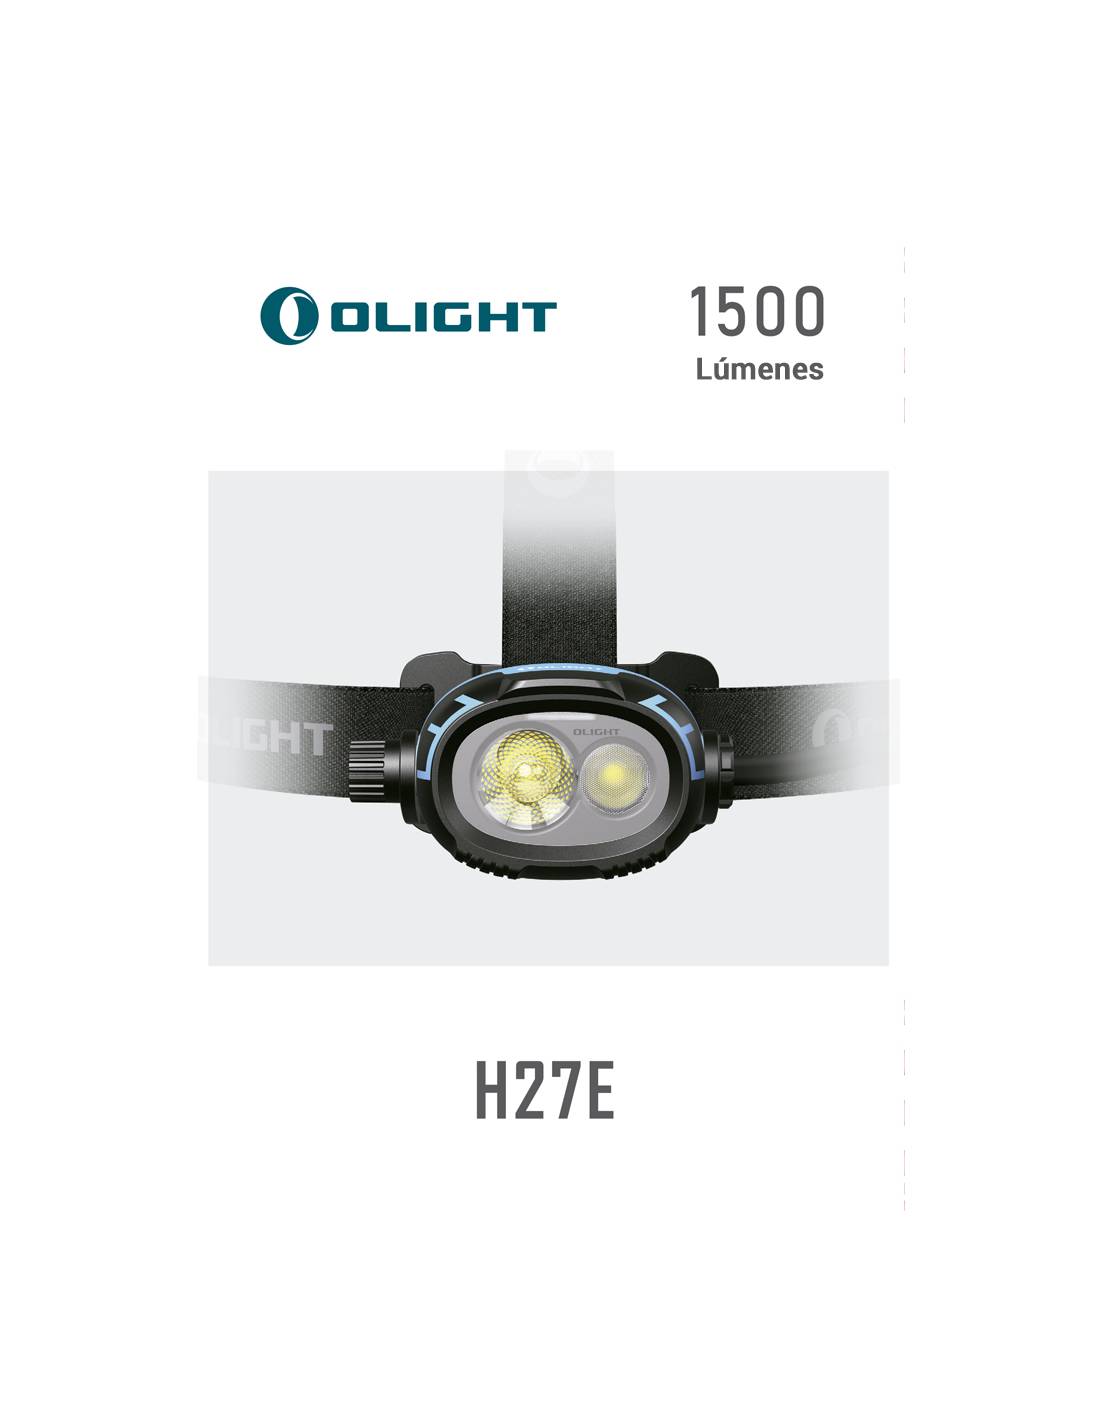 LED Headlight H27E 1500 lum